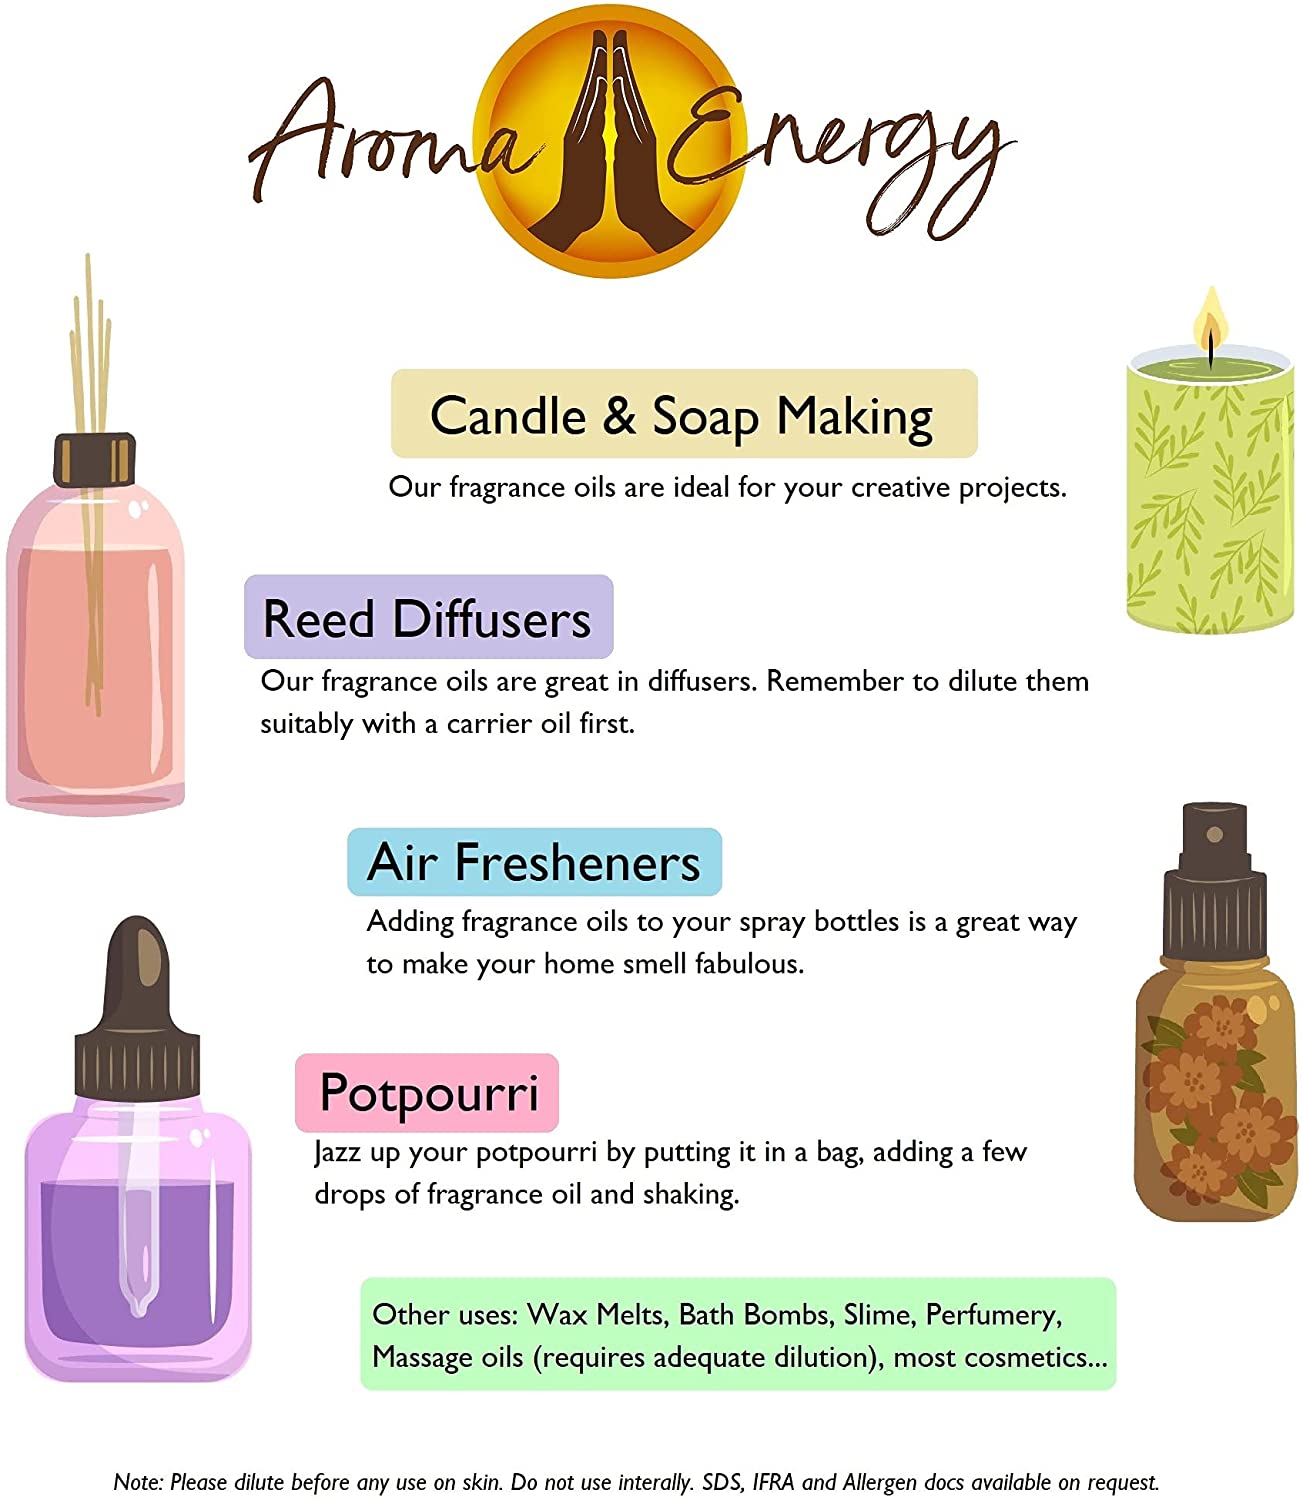 Christmas Morning Fragrance Oil - Aroma Energy